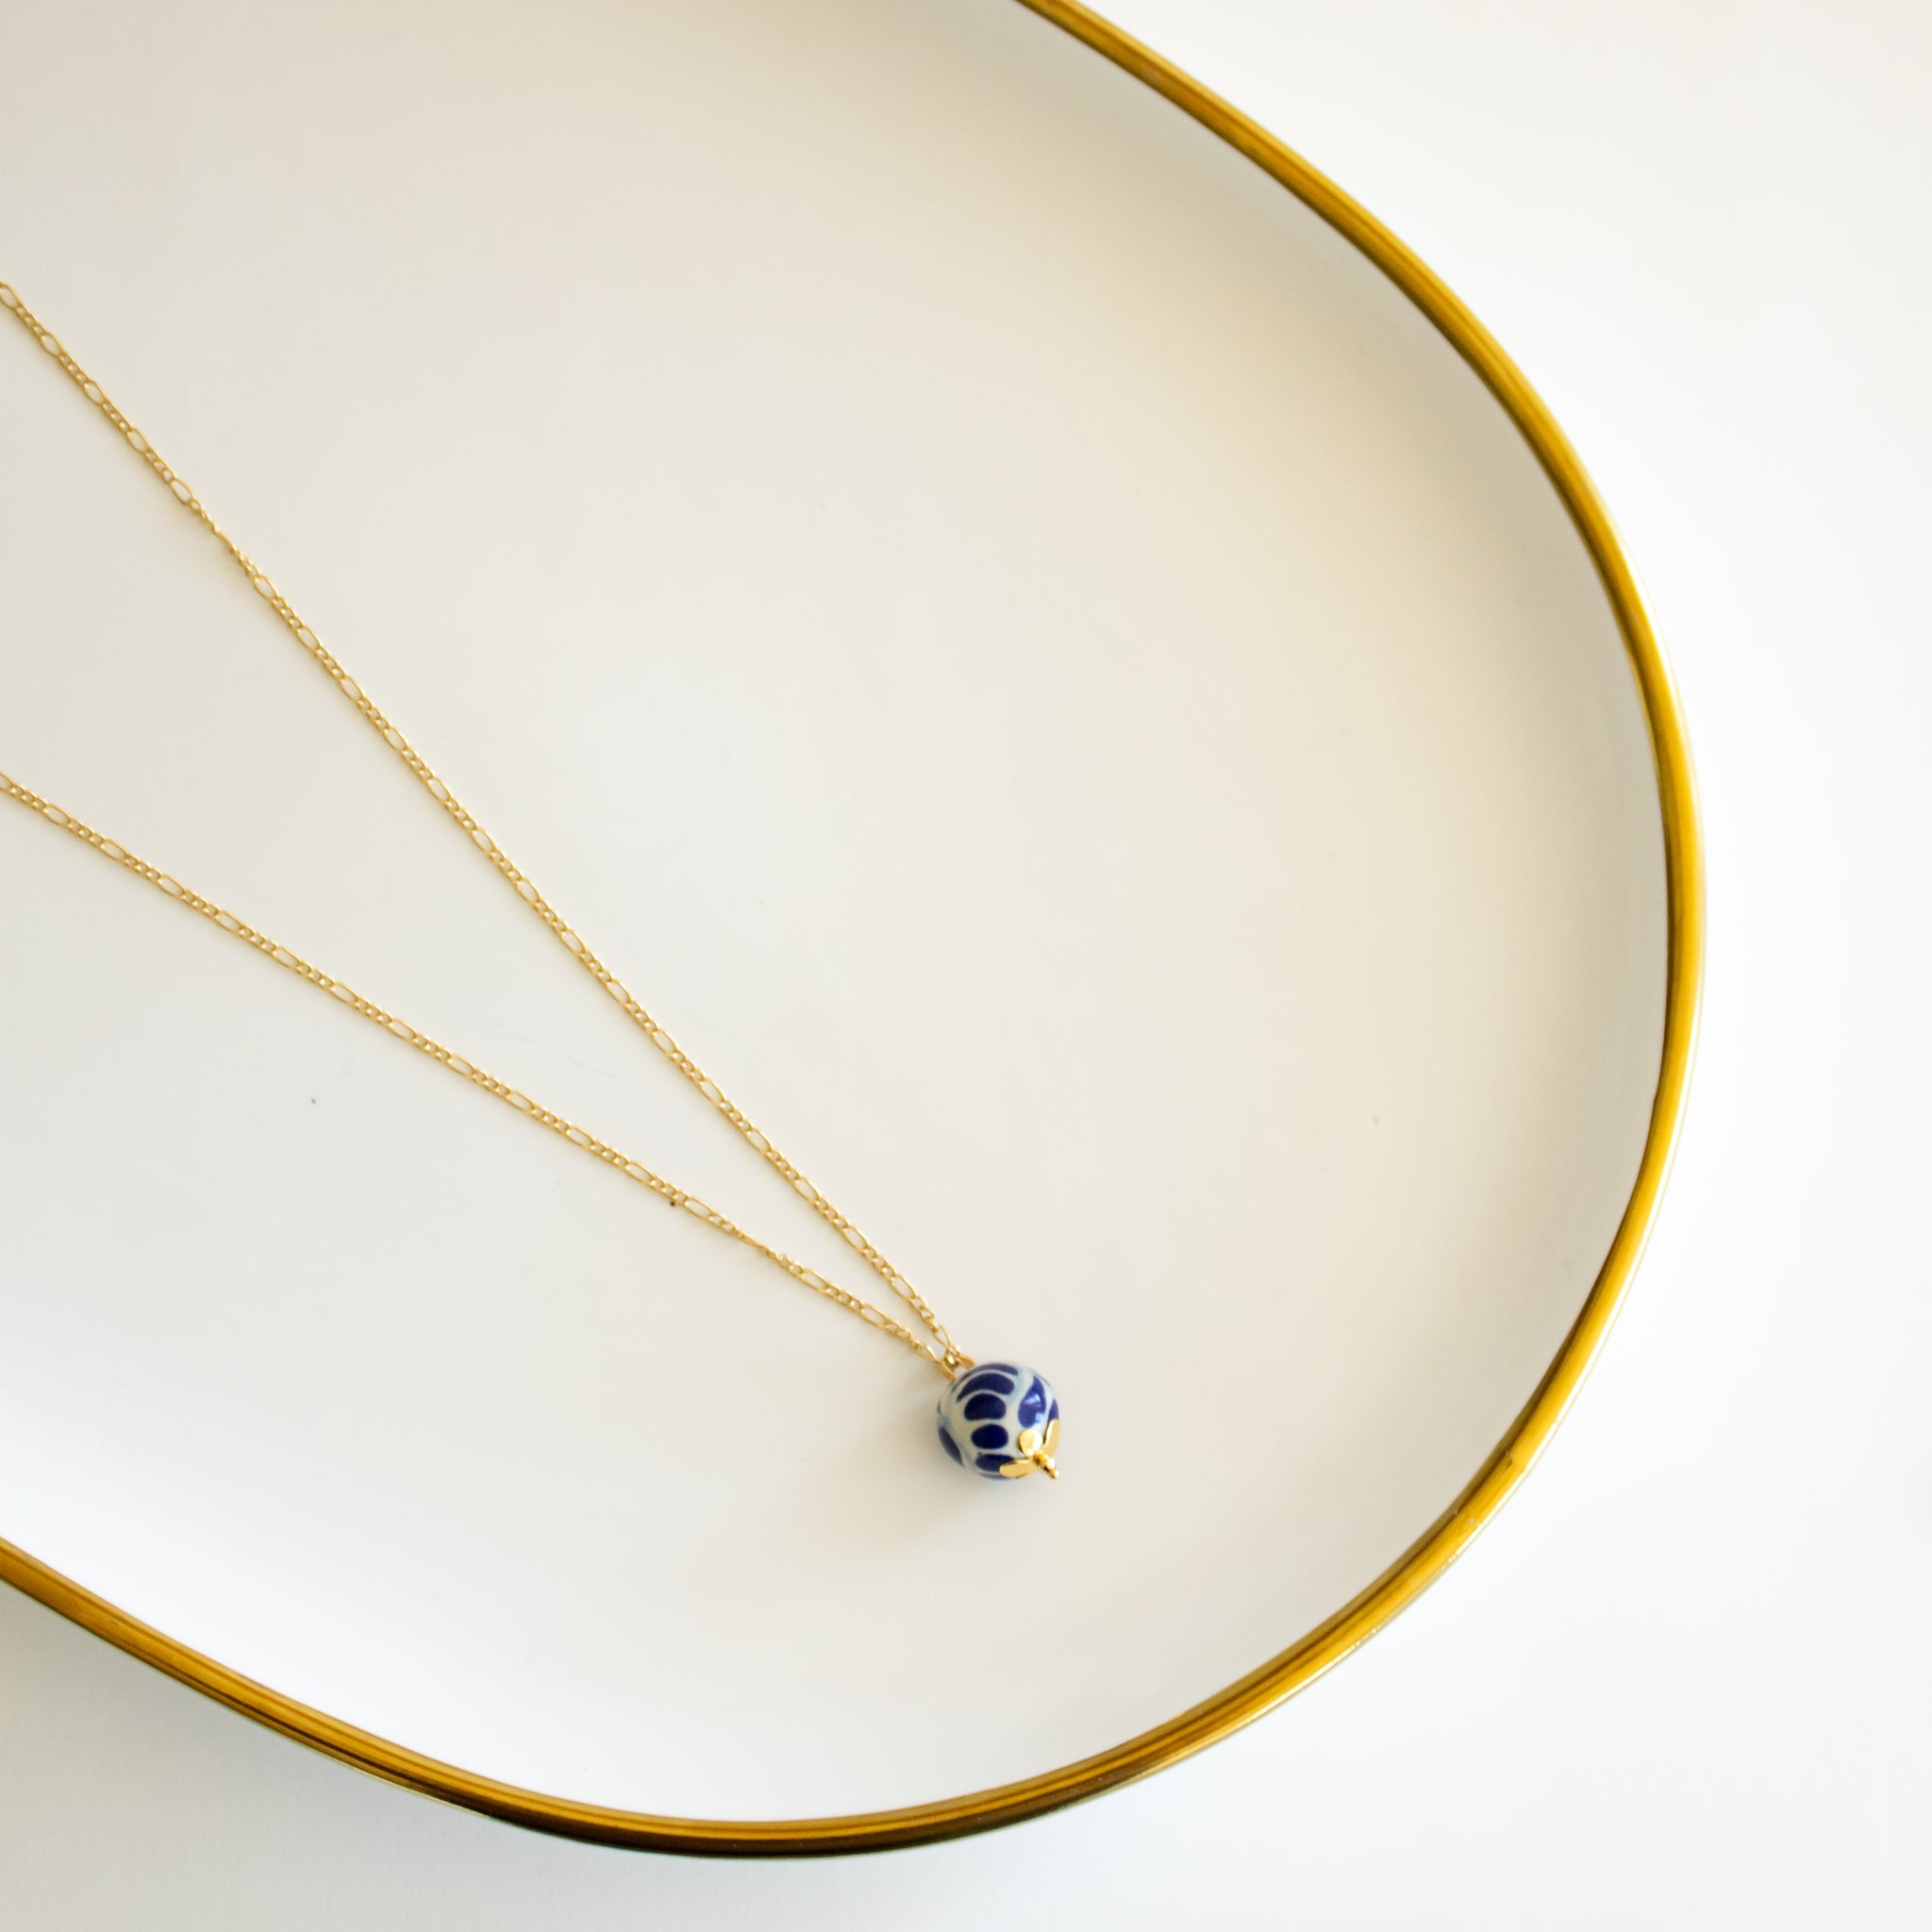 Alicia Necklace - Artisanal Blue Talavera Jewelry